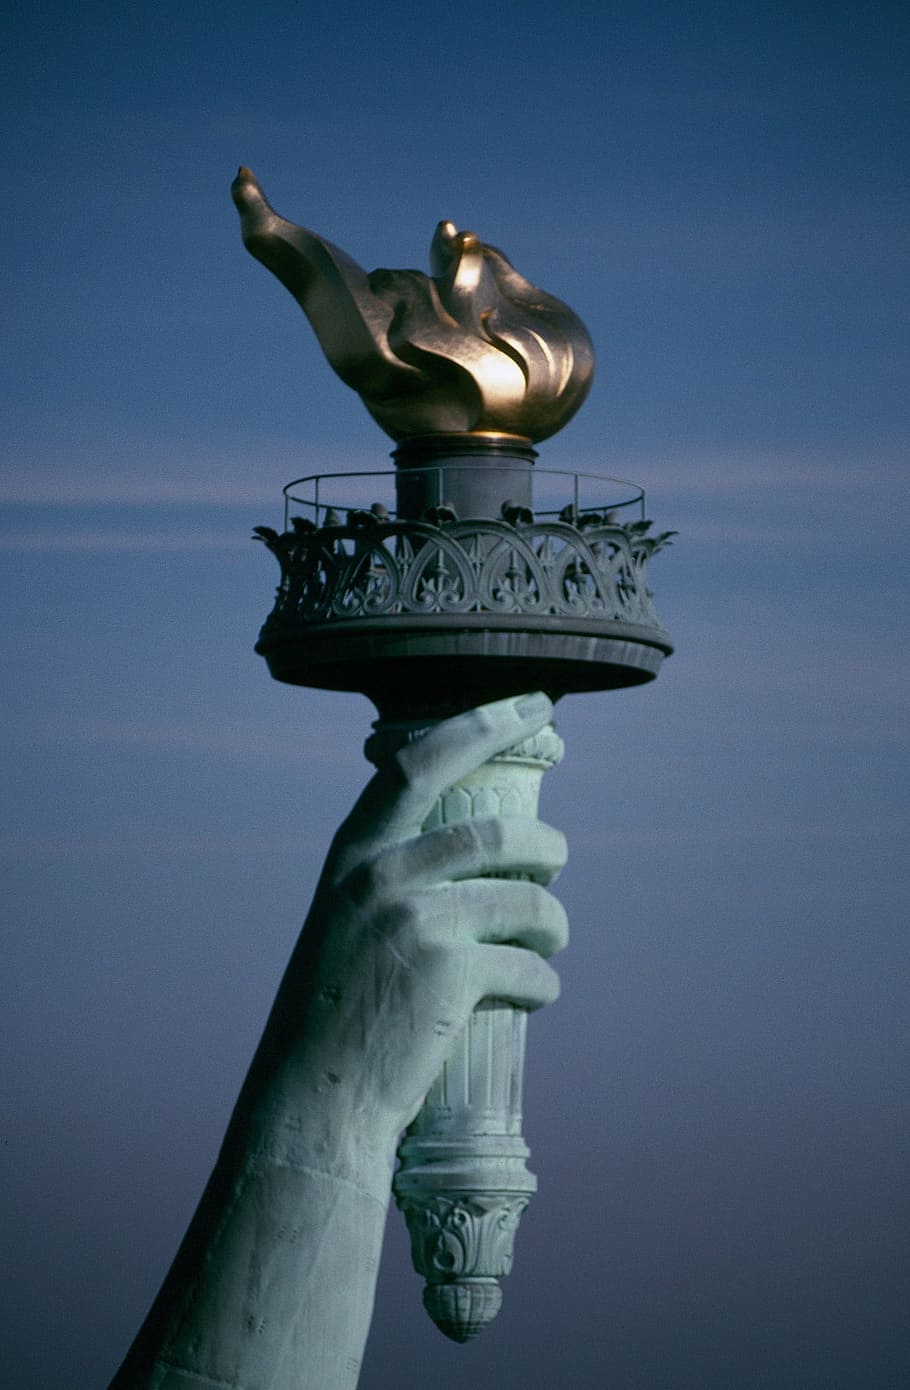 patung, fotografi obor kebebasan, siang hari, patung liberty, api, obor, simbol, dom, lengan, kota new york